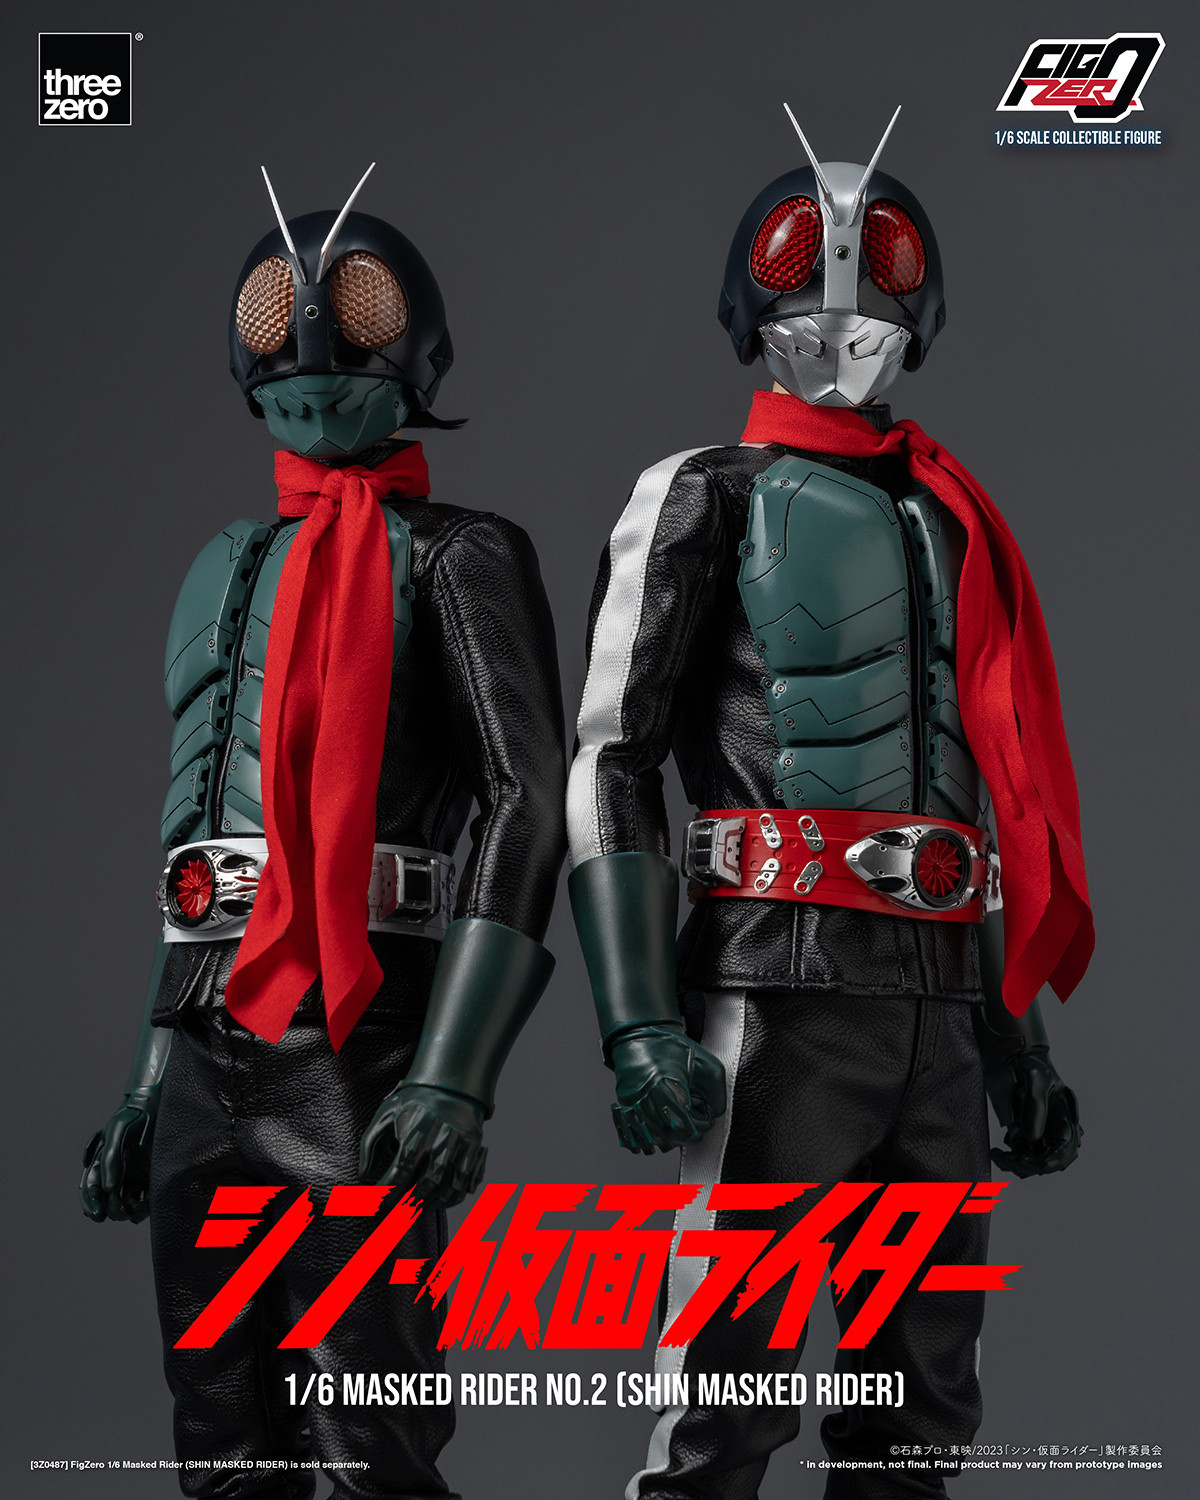 Shin Masked Rider No. 2 (Prototype Shown) View 22